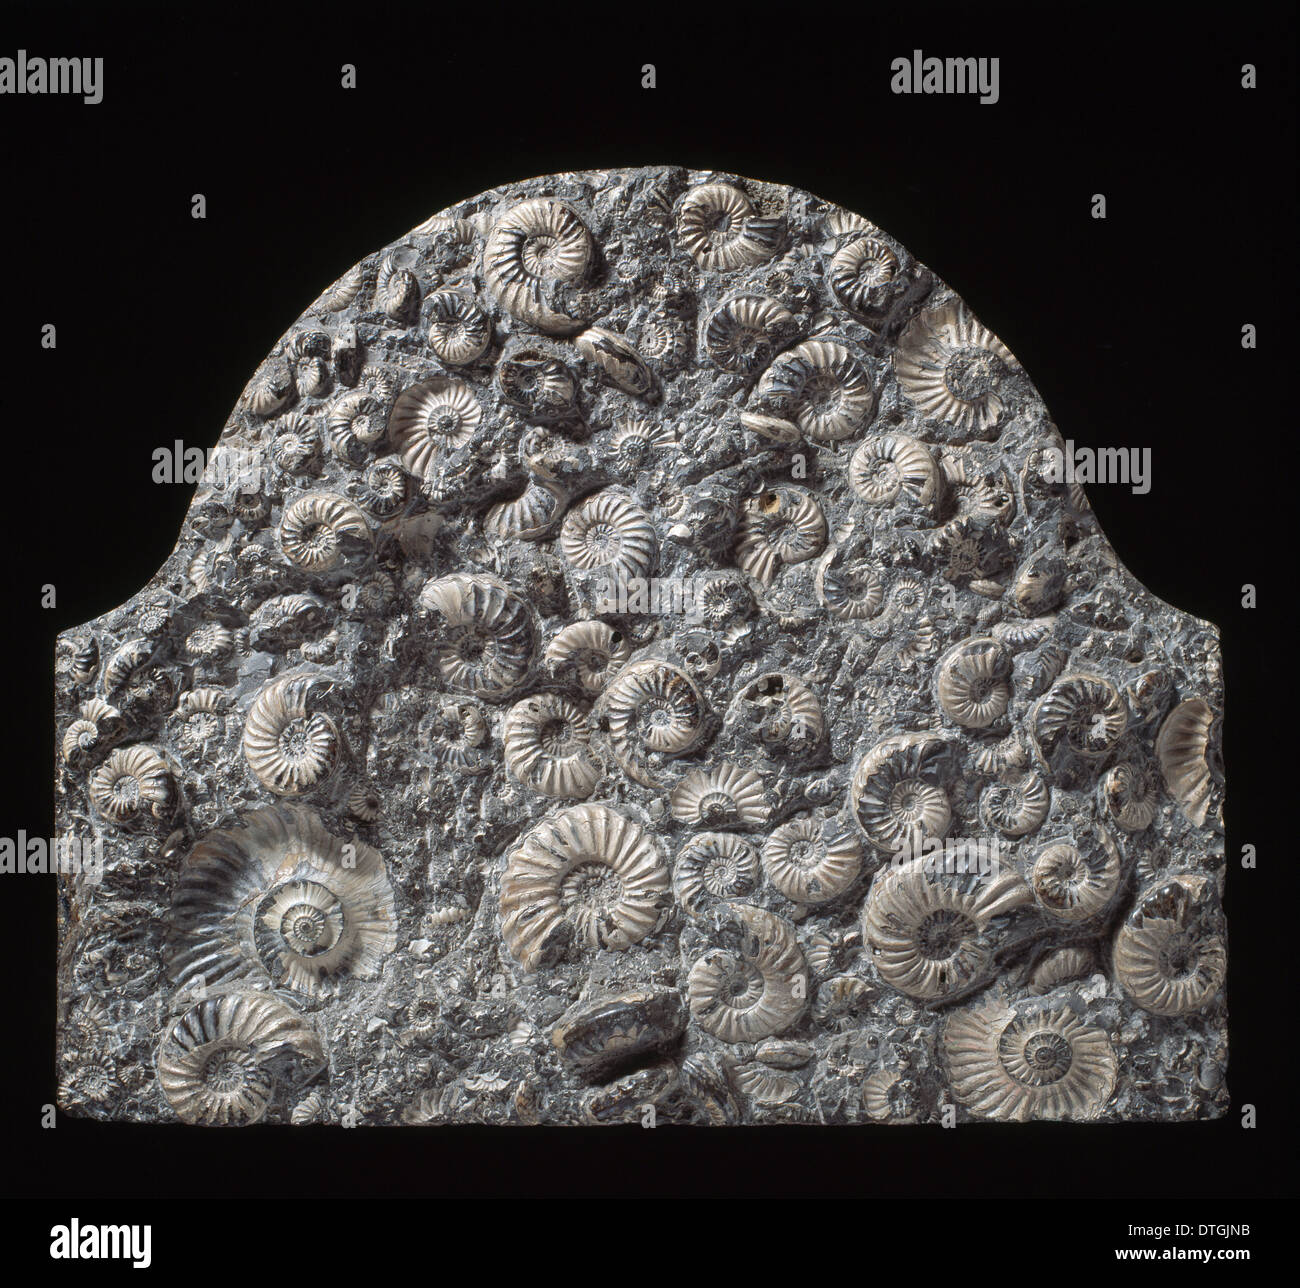 Fossile Ammoniten als Gedenkstein Stockfoto